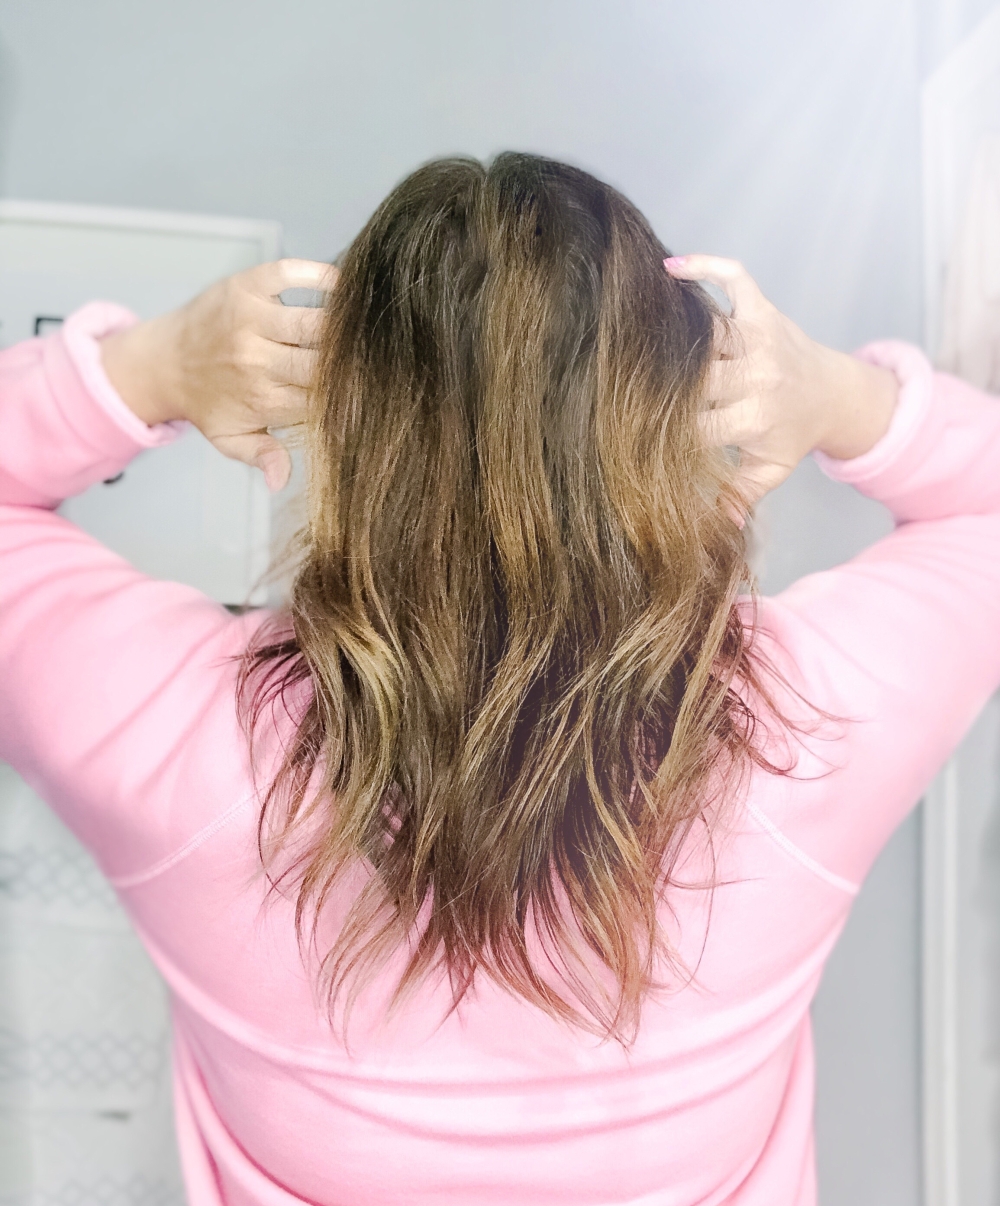 The Hair detox method to achieve long healthy hair